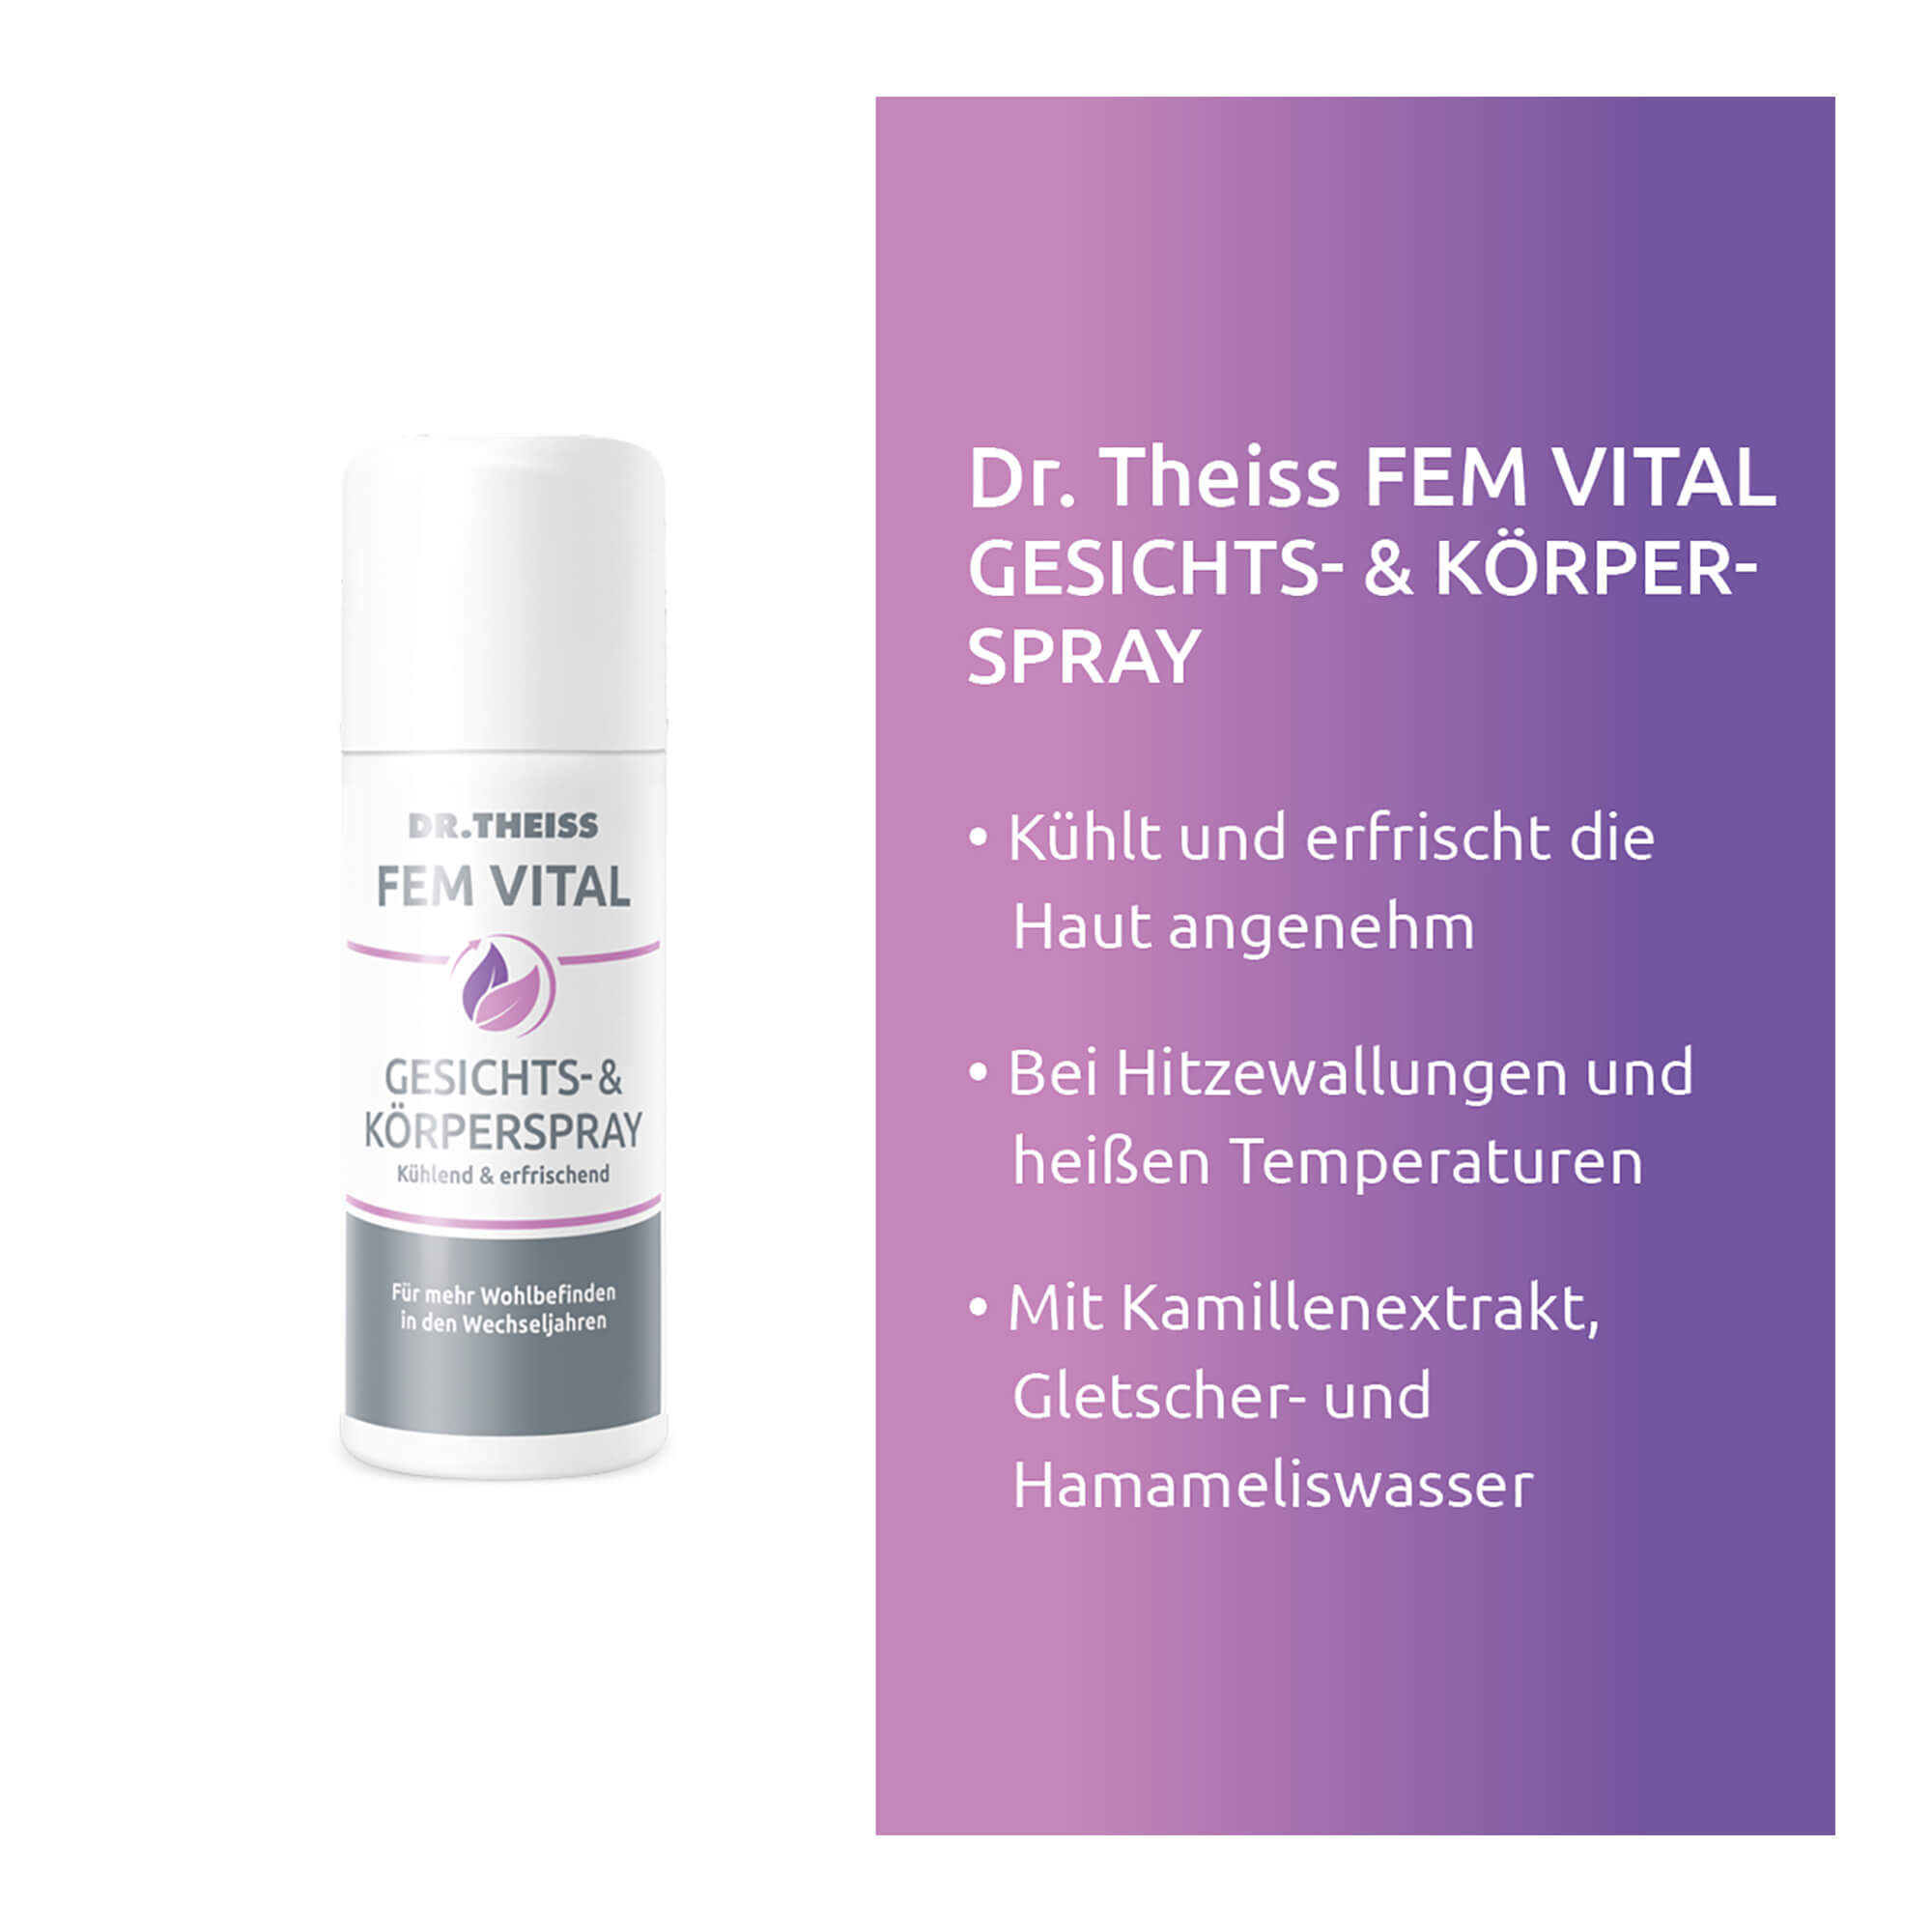 Dr. Theiss FEM VITAL Gesichts- & Körperspray Eigenschaften